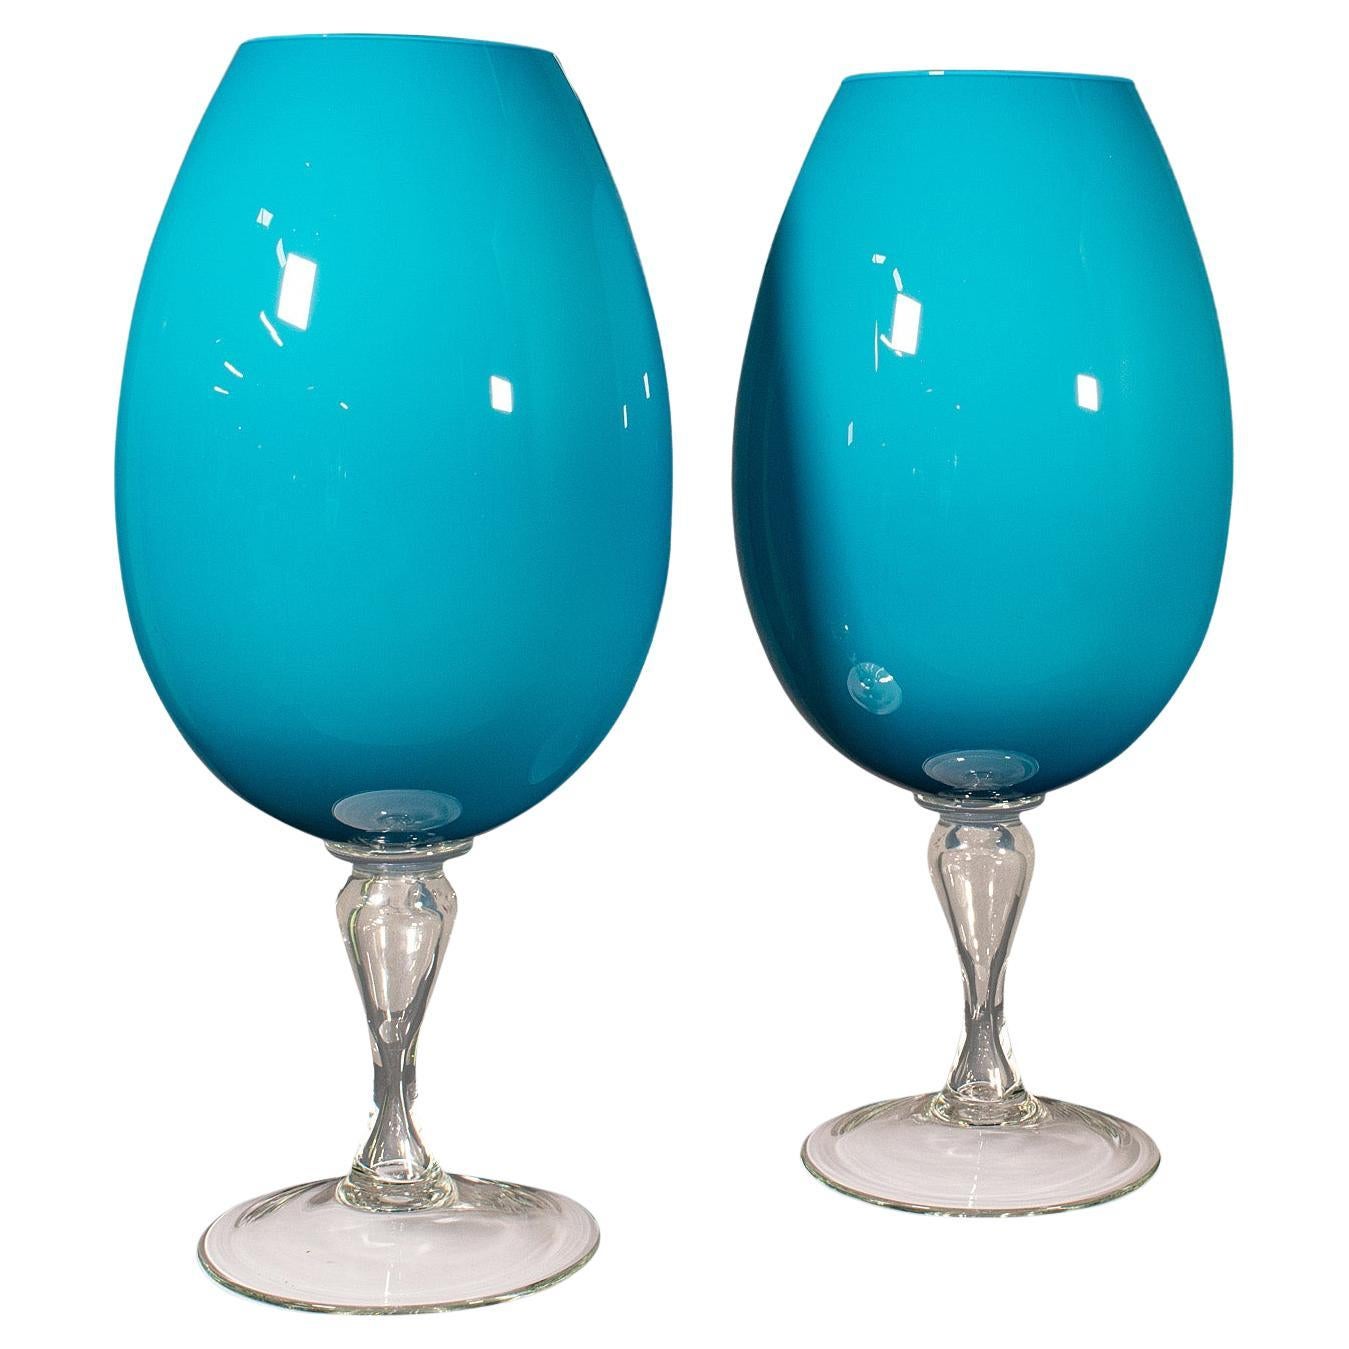 https://a.1stdibscdn.com/giant-pair-of-vintage-wine-glasses-english-decorative-planter-vase-c1970-for-sale/f_26453/f_312981321668423745802/f_31298132_1668423746174_bg_processed.jpg